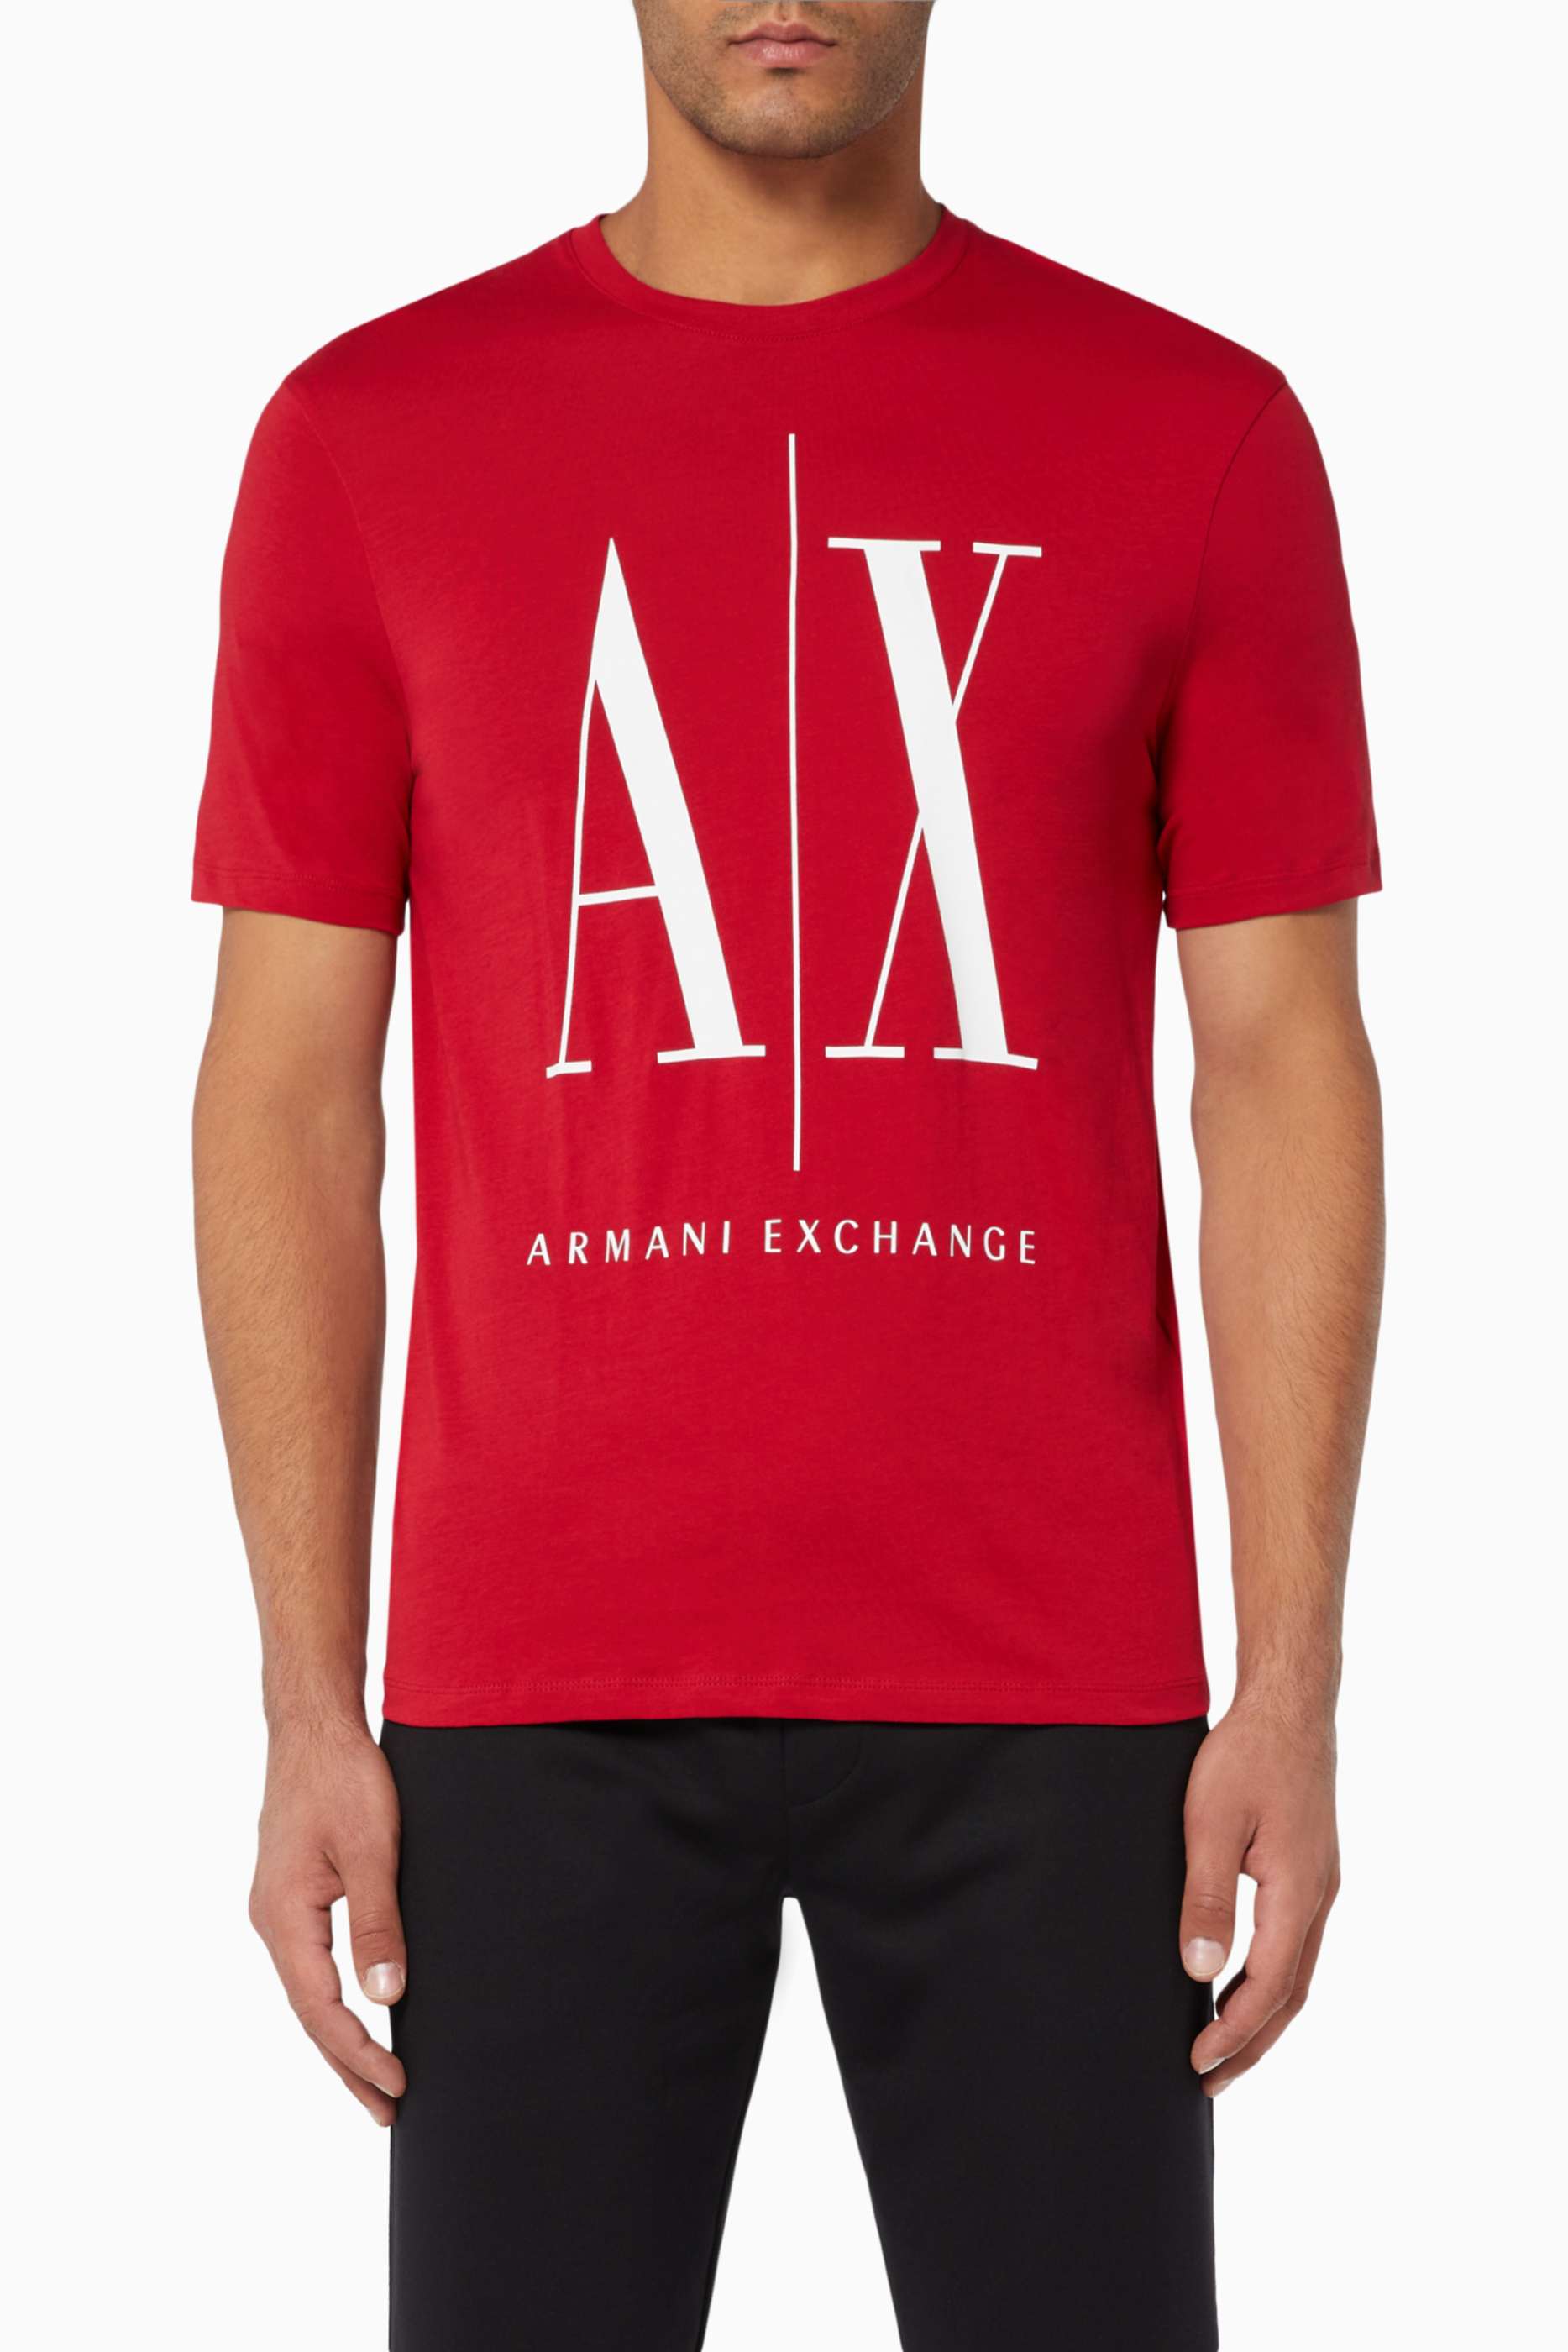 armani exchange red shirt